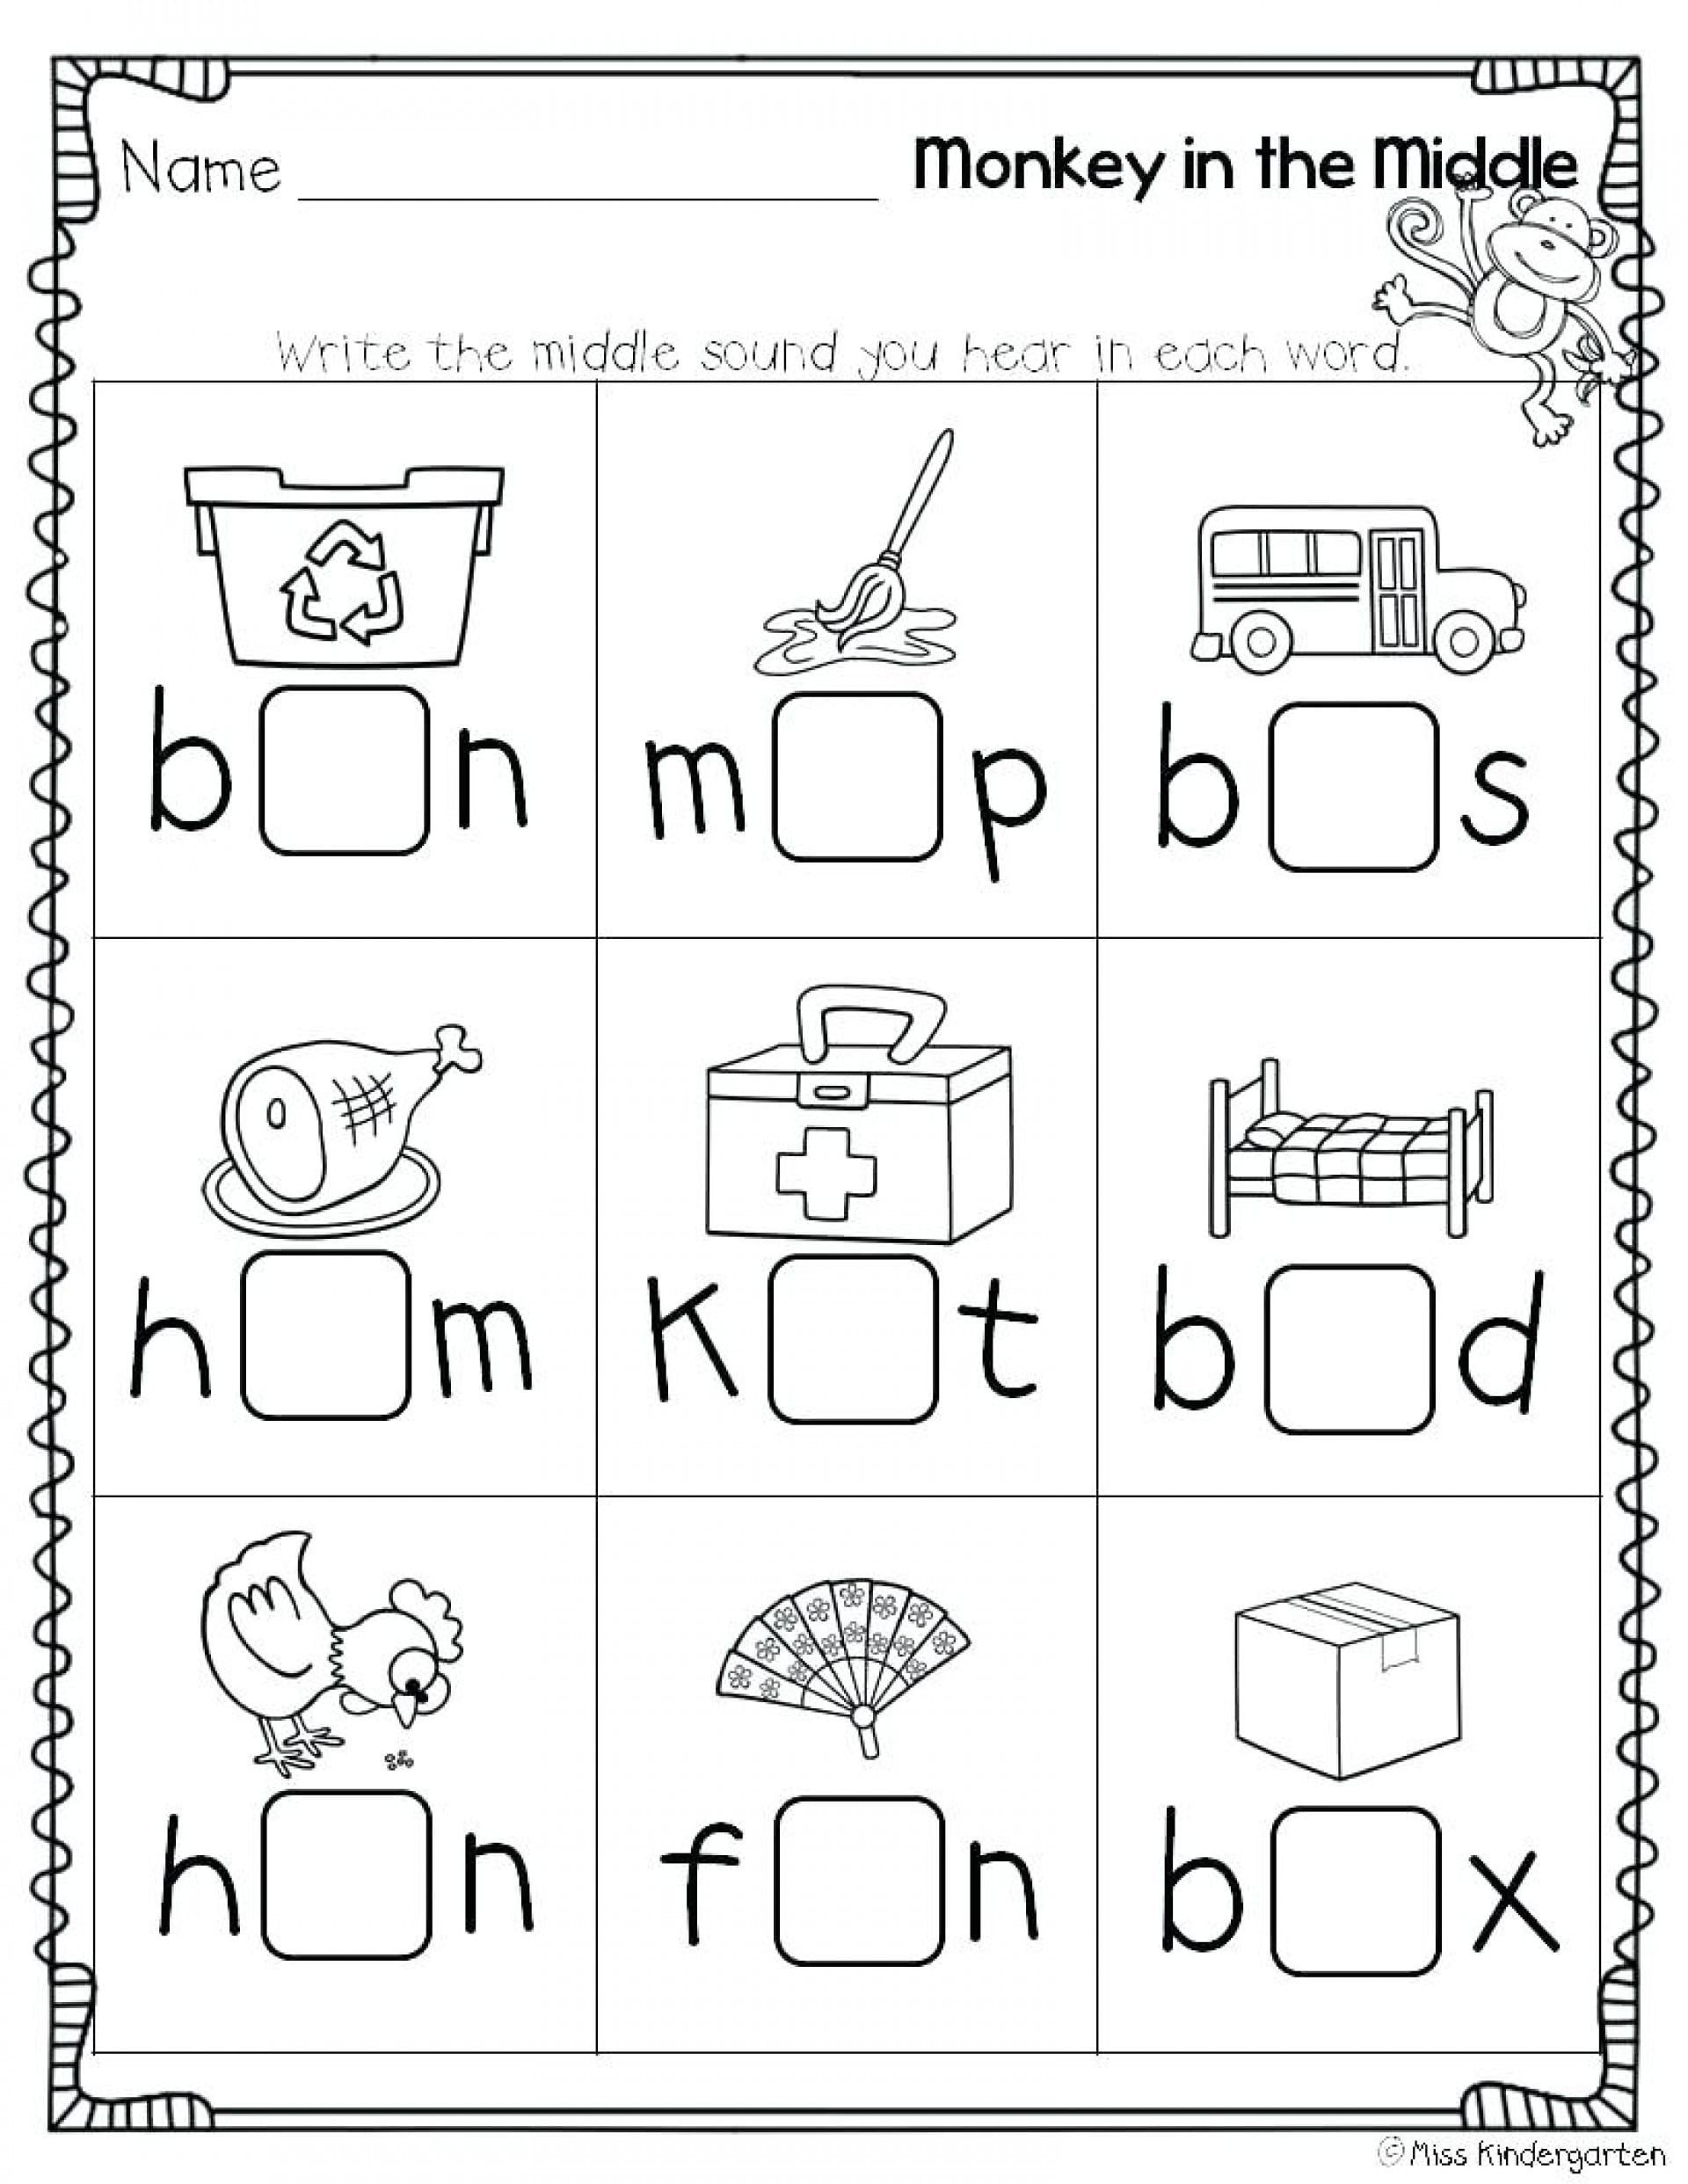 022-kindergarten-phonics-worksheets-free-printables-db-excel